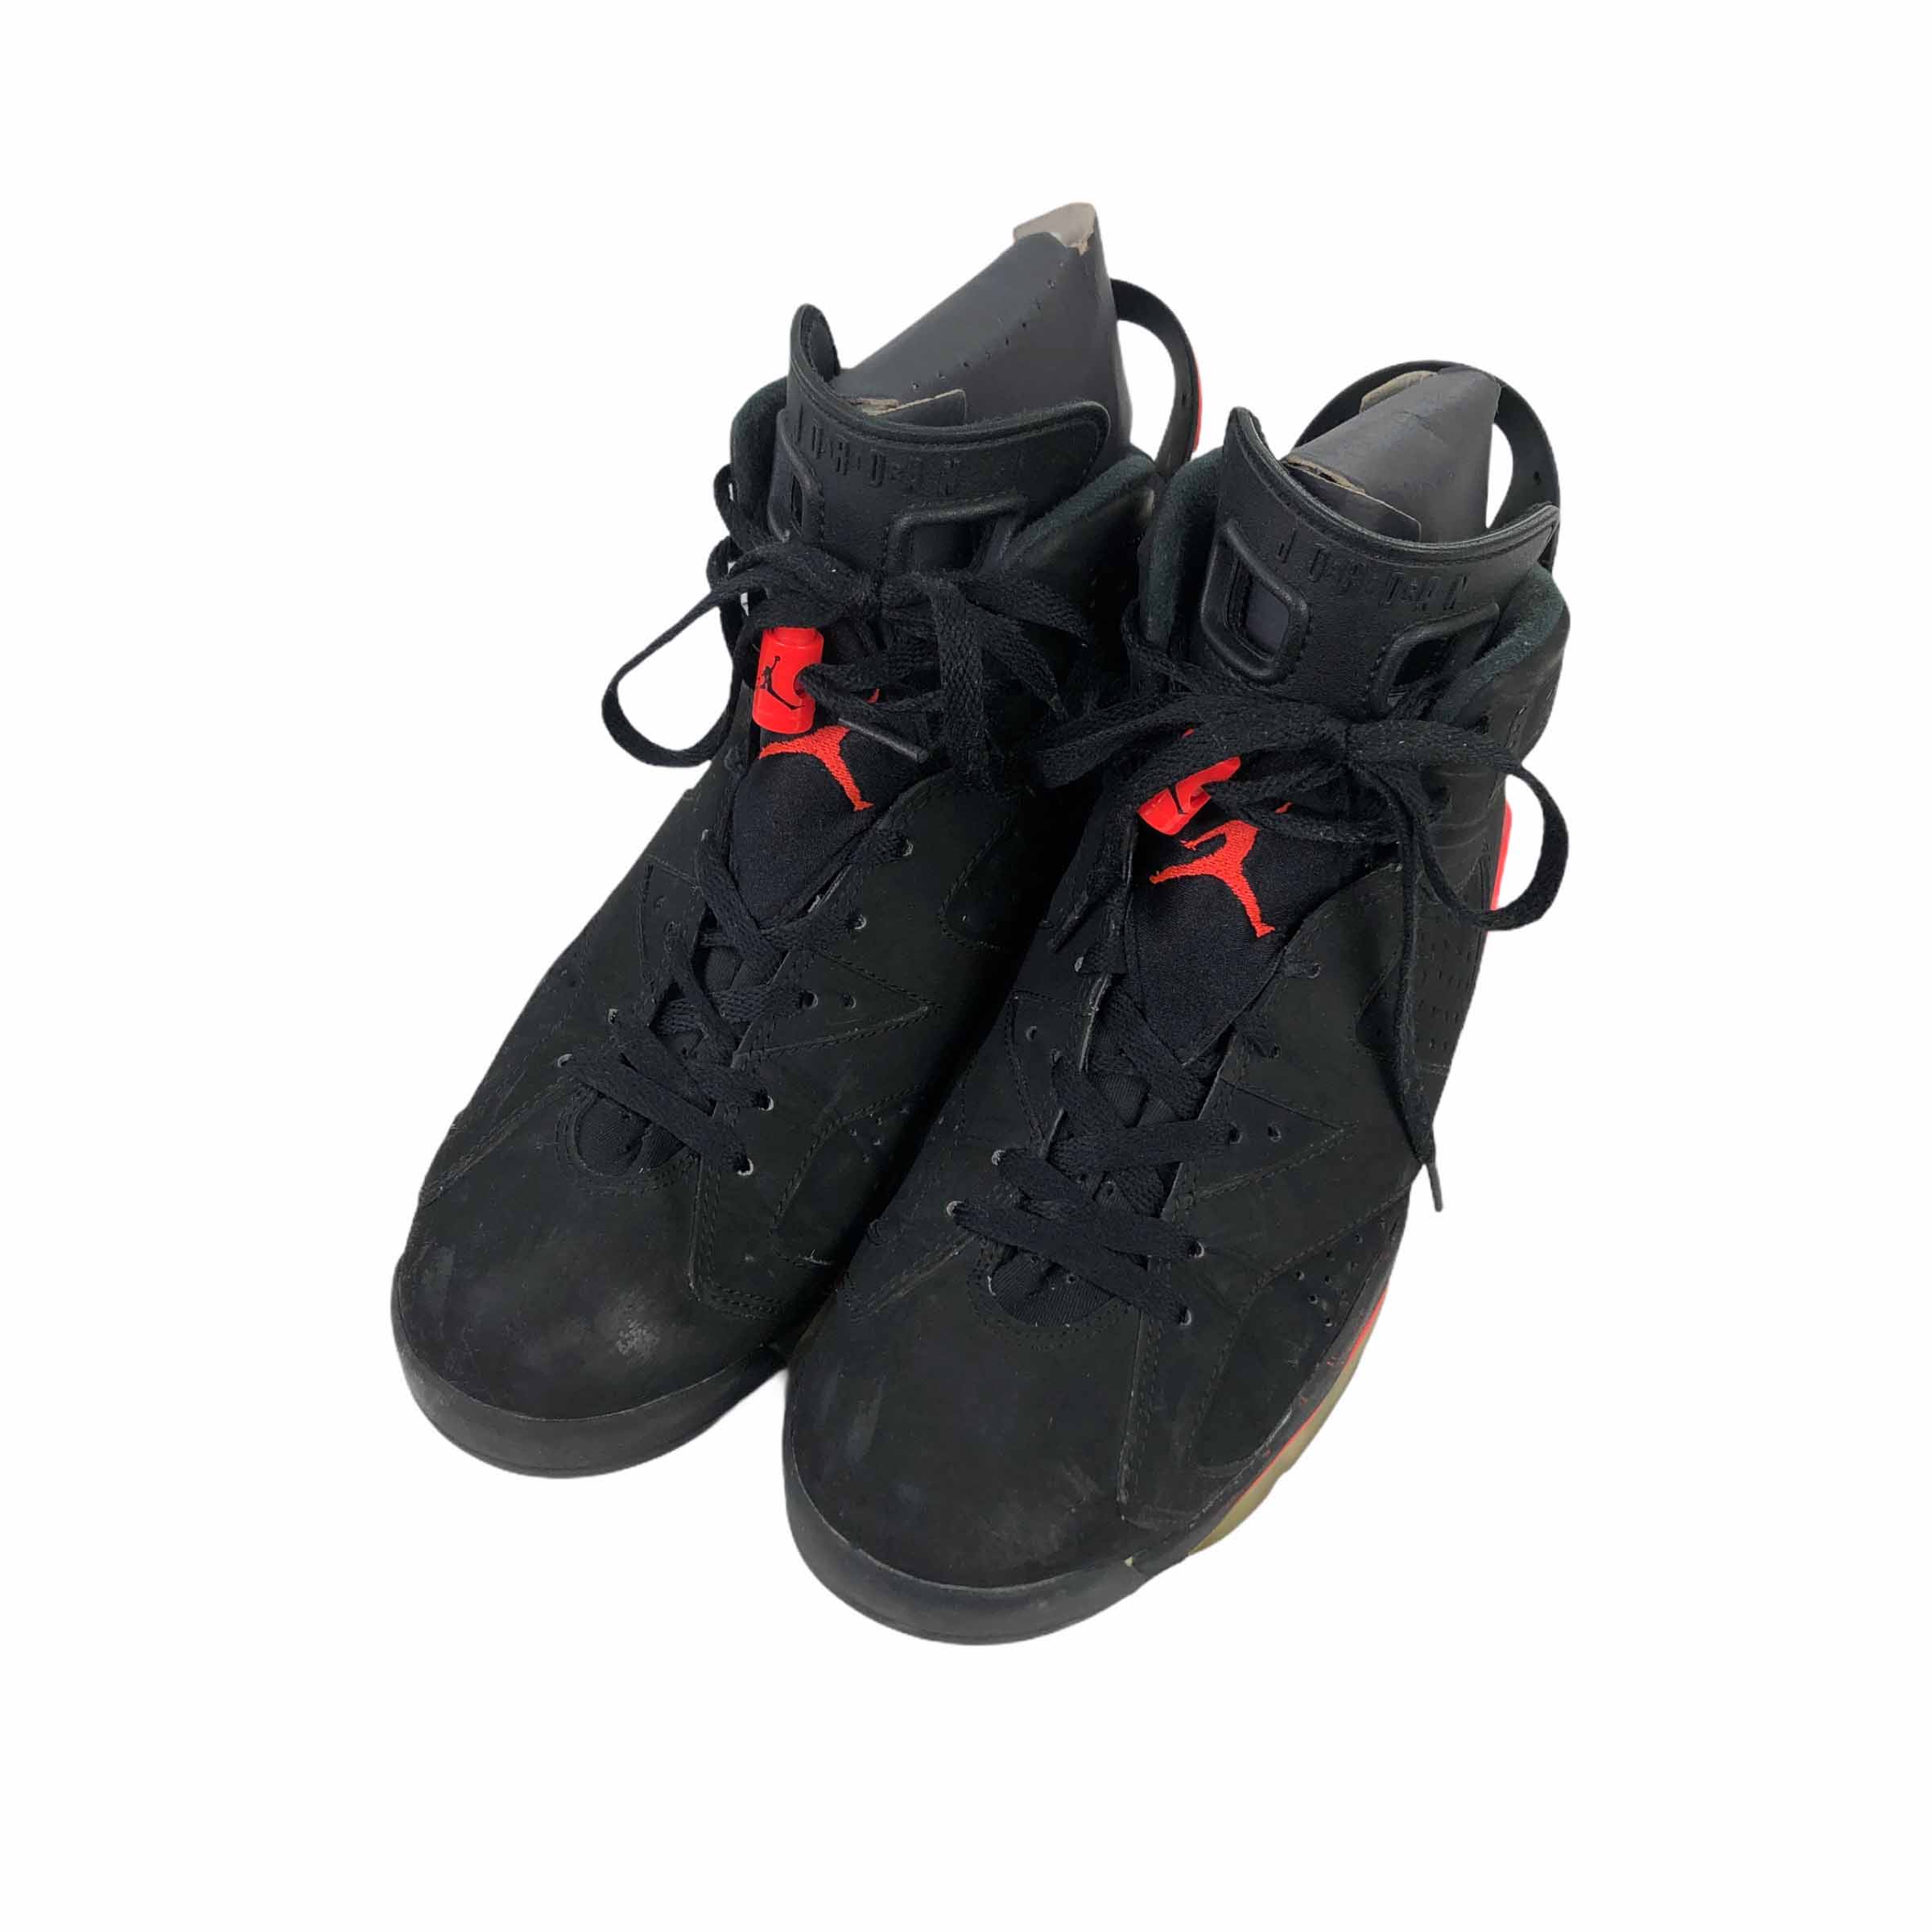 [Nike] Jordan 6 Retro Infrared BK -  Size 260